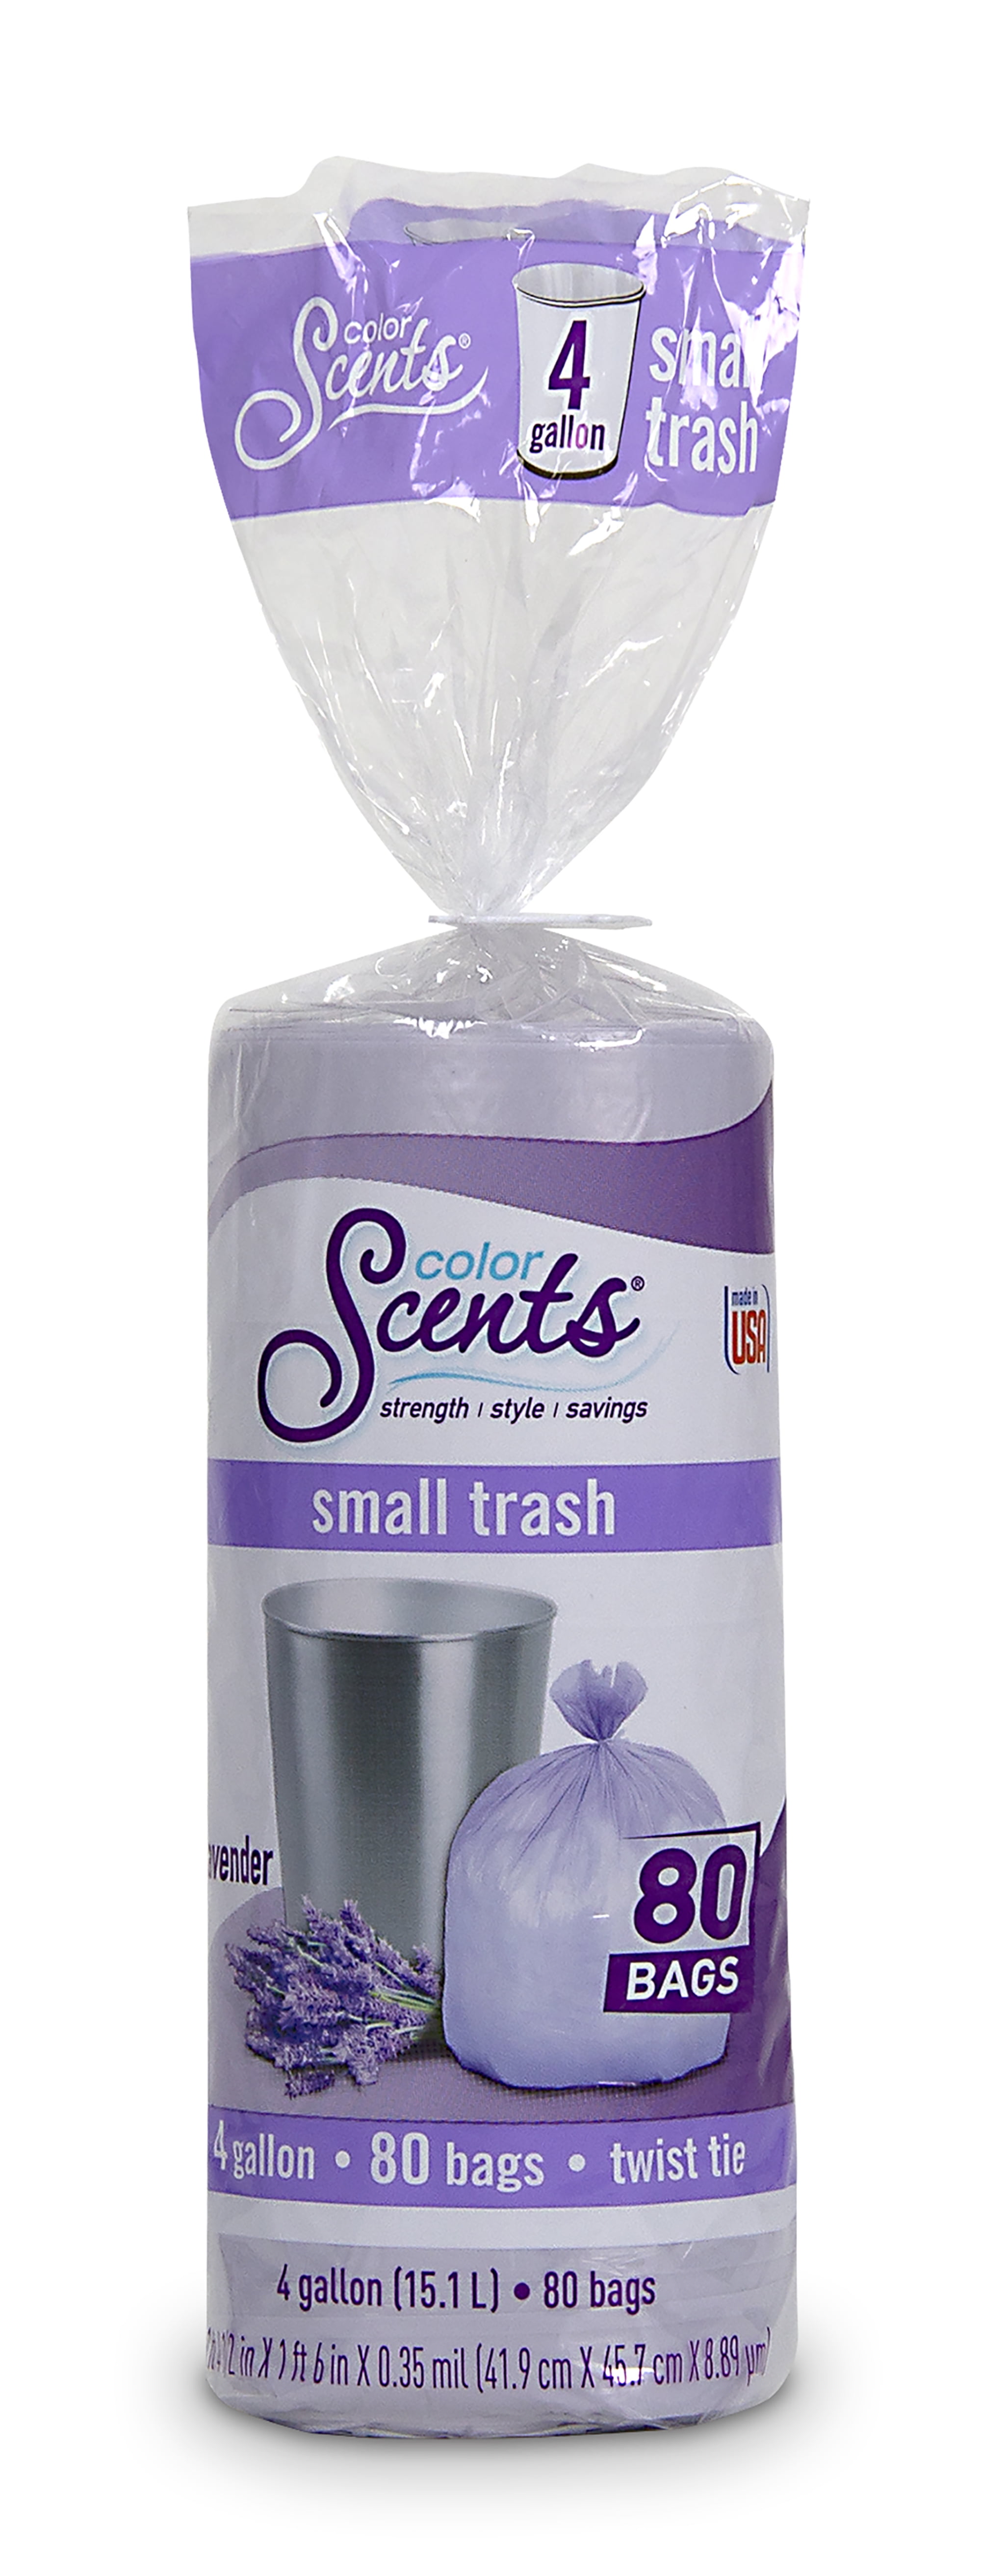 Color Scents - Small Trash Bags for Lightweight Waste, Twist Tie - 4 Gallon  Trash Bags, 480 Count - Bathroom Trash Bag, Scented Garbage Bag, Lavender